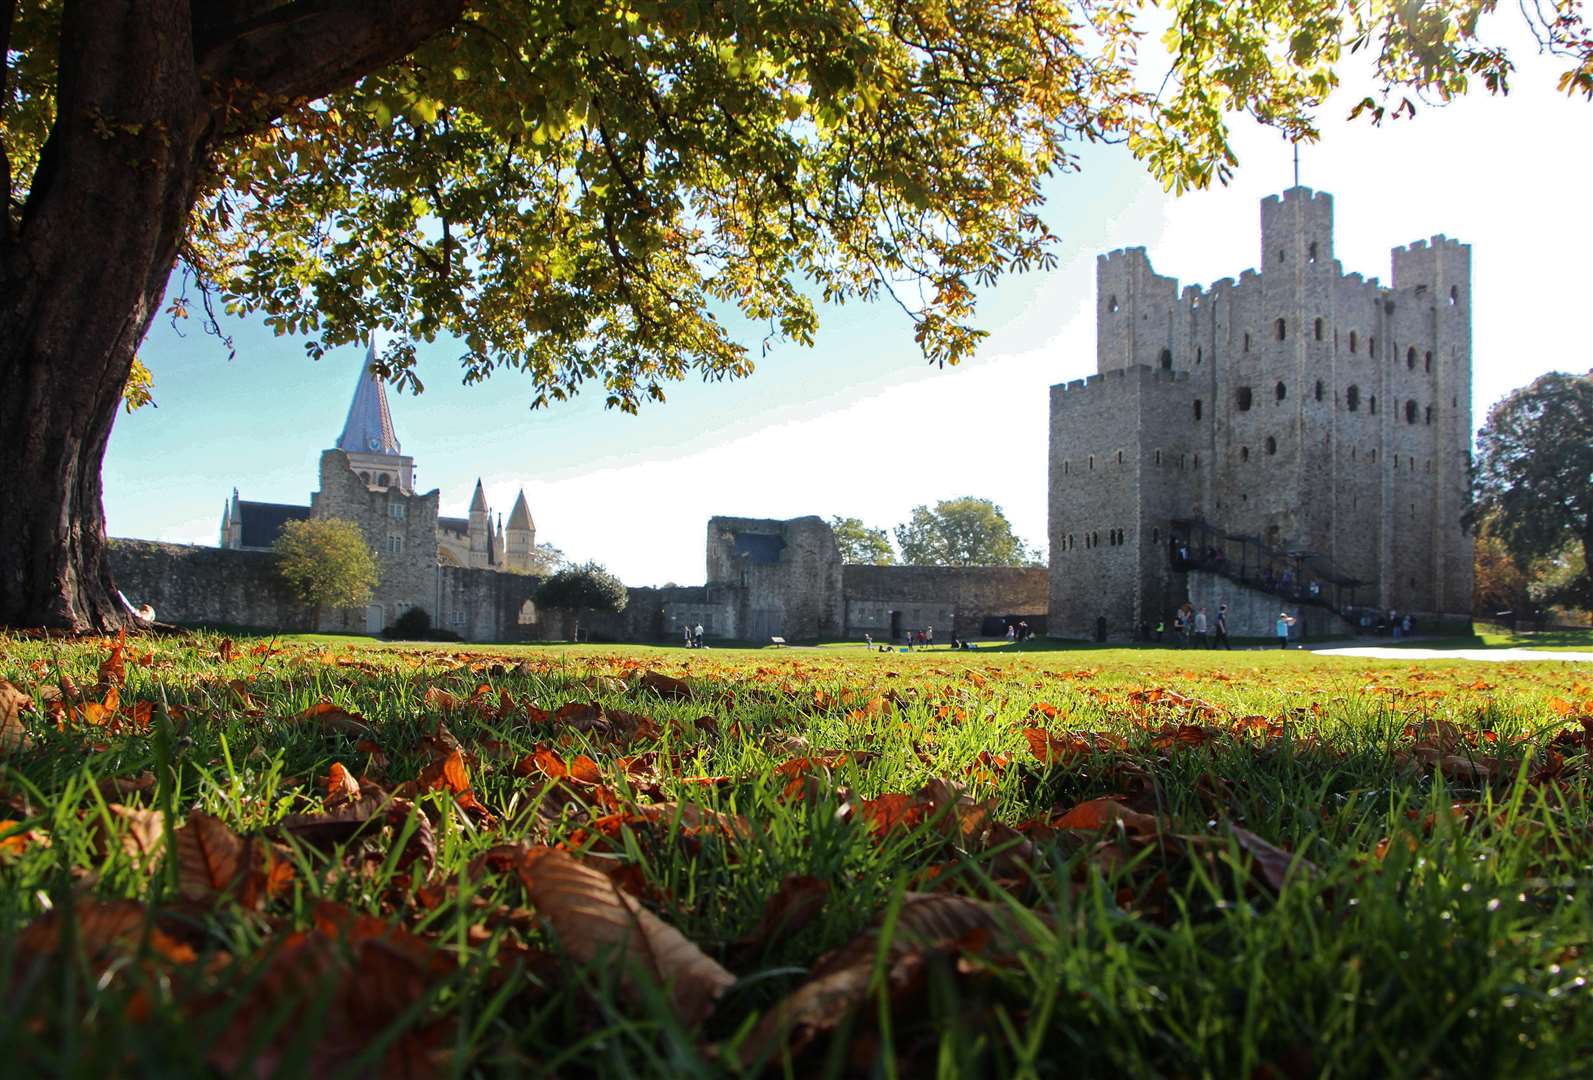 Rochester Castle Gardens in the autumn sunshine. Credit David Mathias.